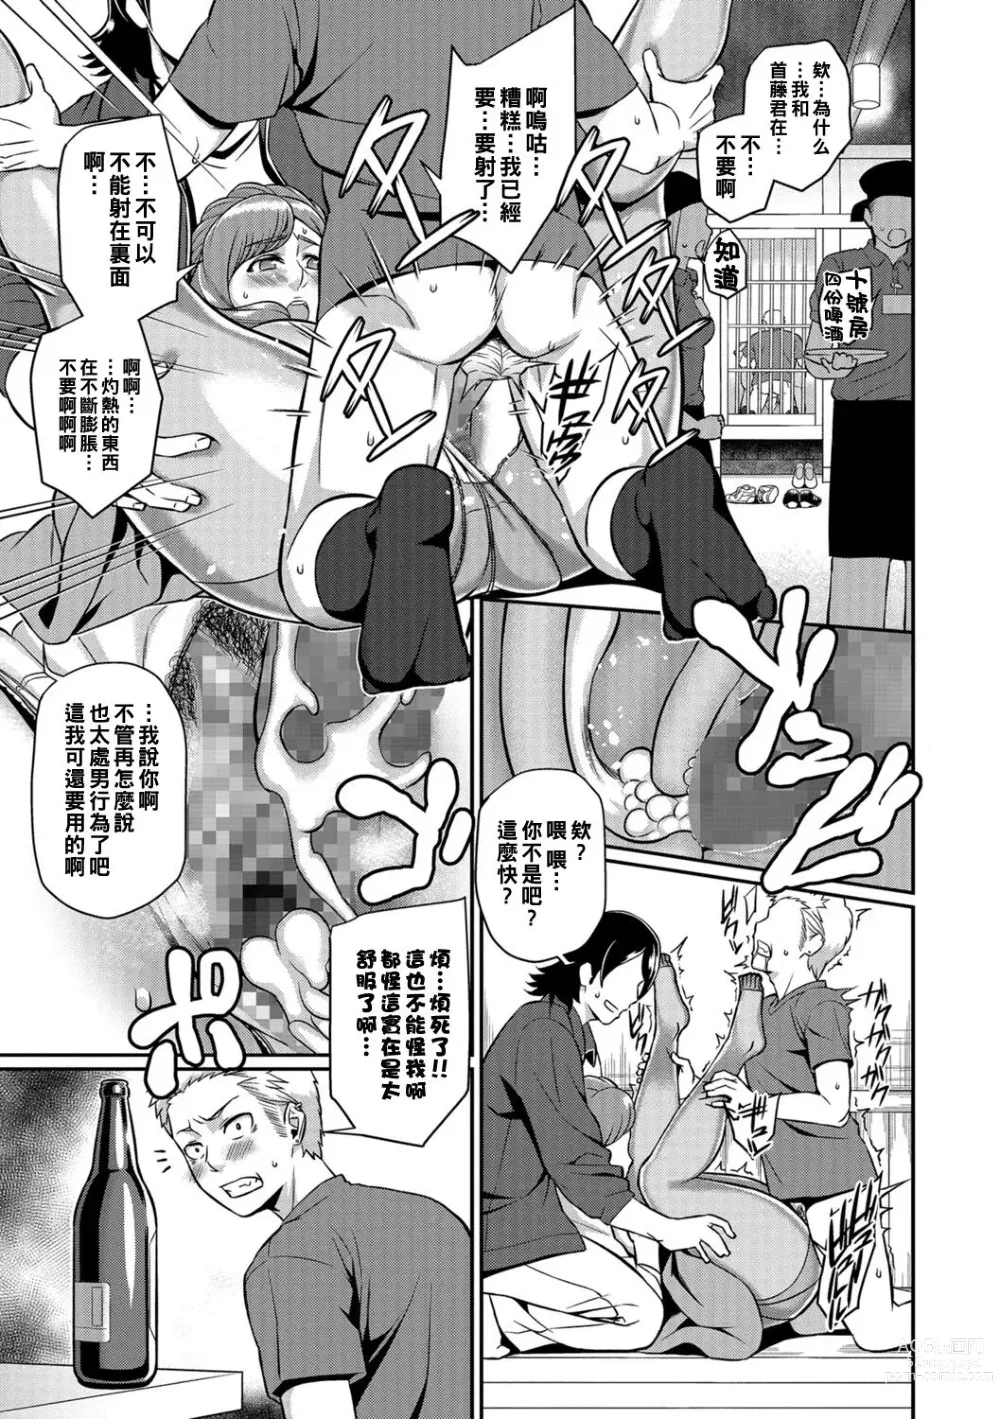 Page 7 of manga Oni Kurui Mihoto Sake